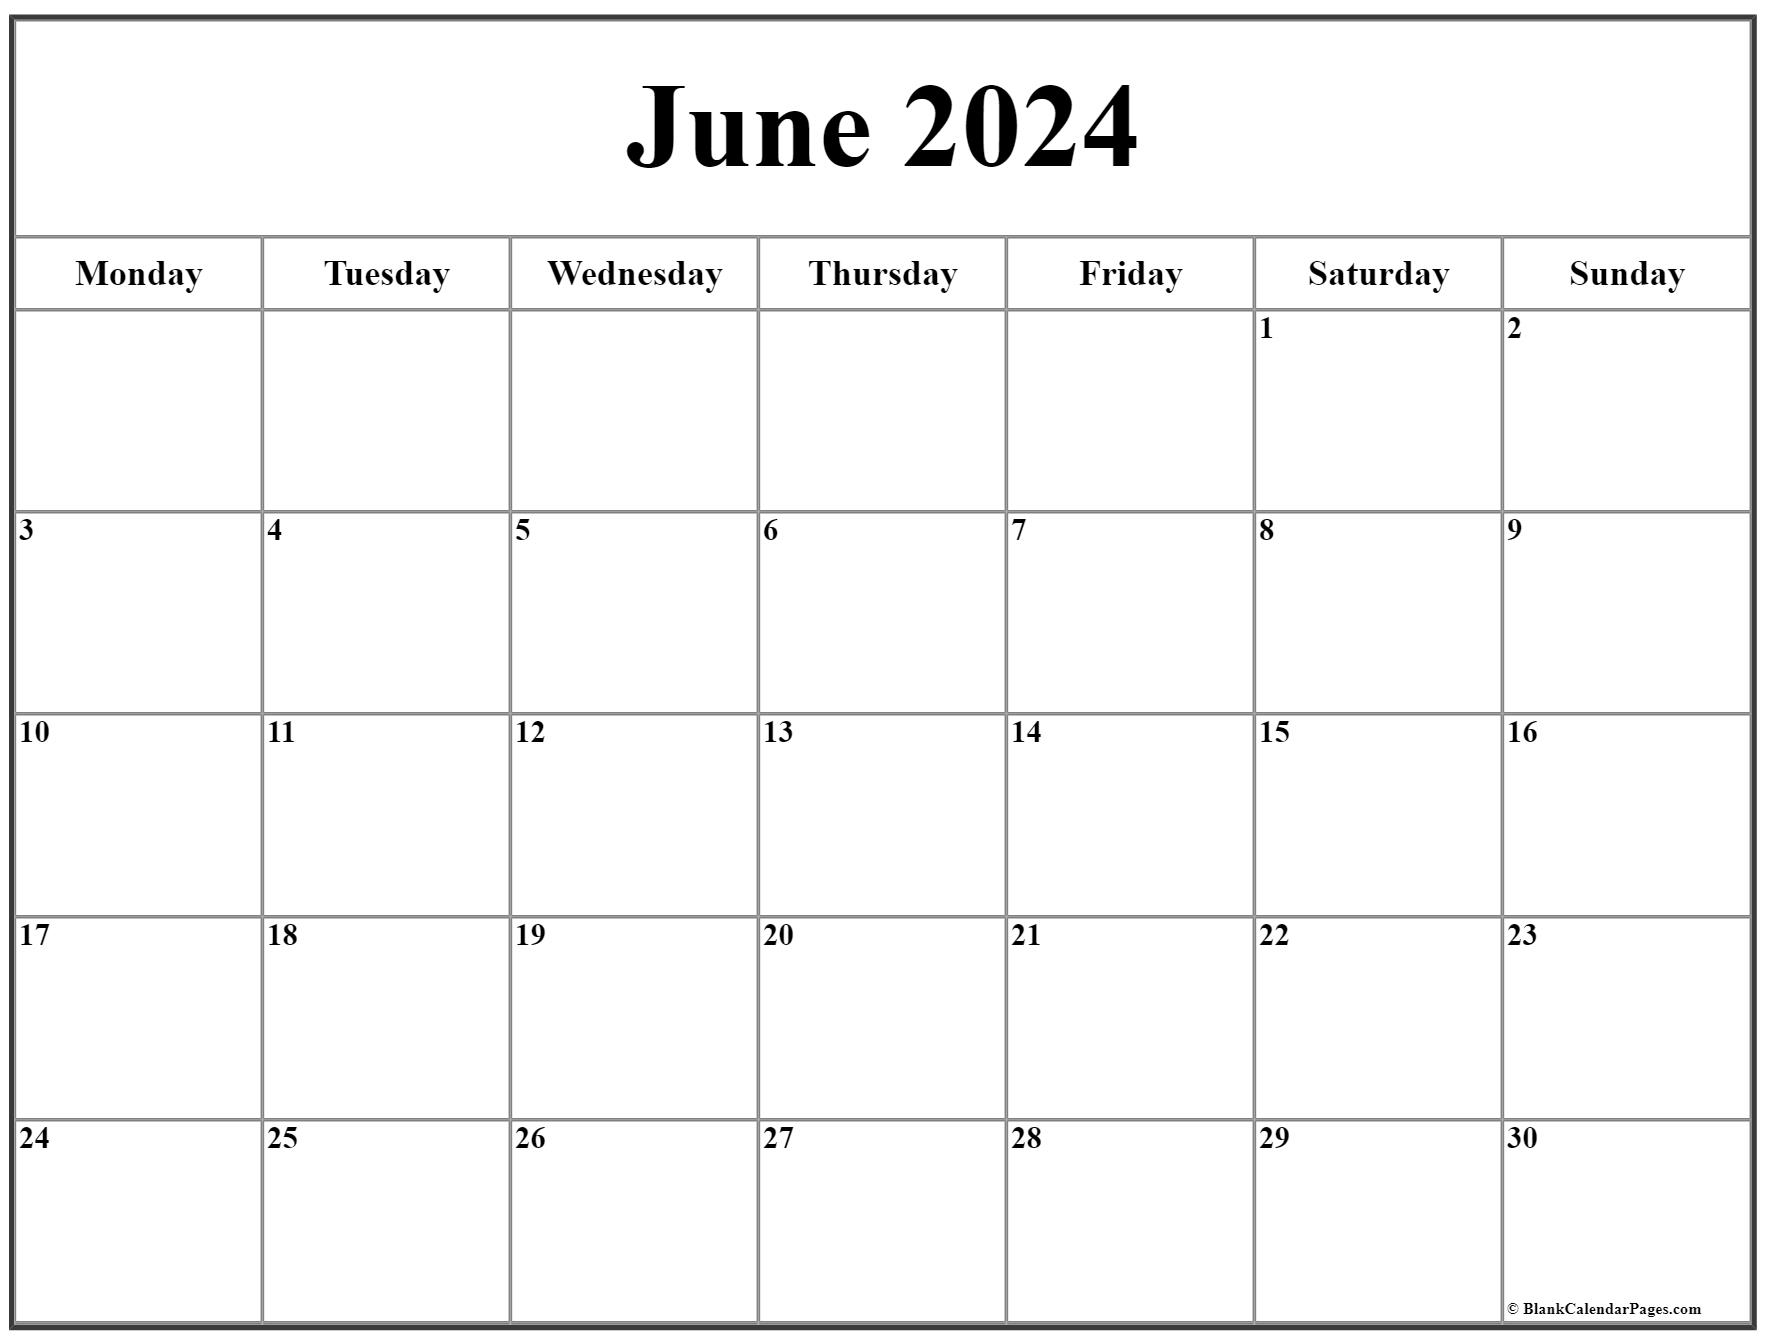 June 24 2021 Week Calendar Monday To Sunday | Huts Calendar